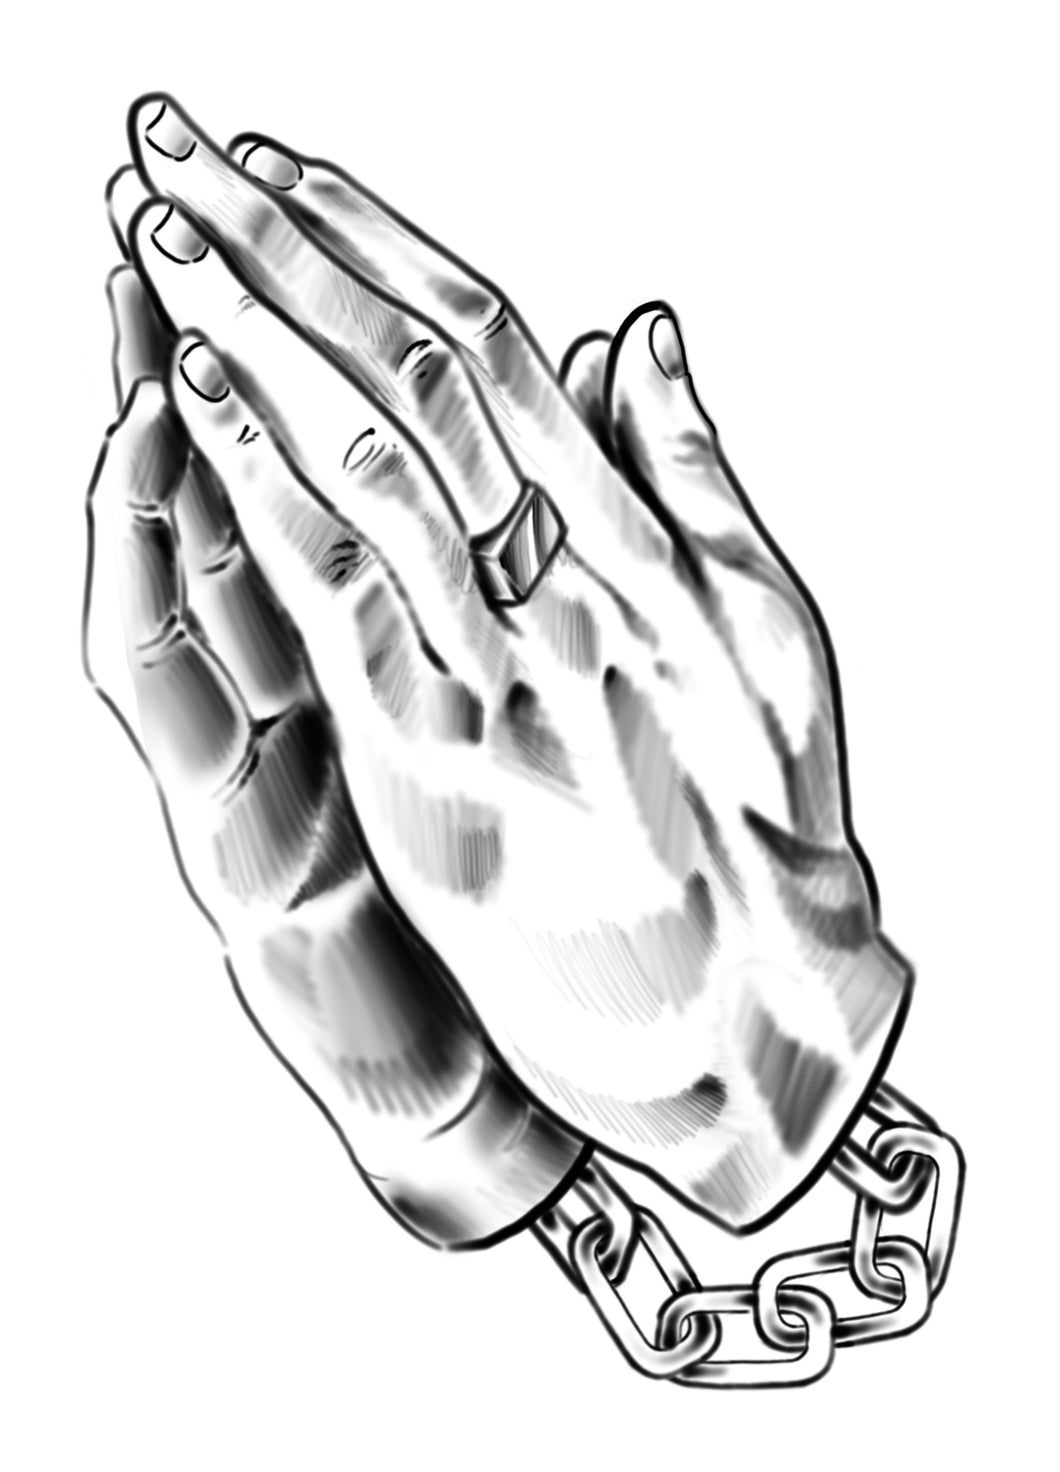 Praying Hands by Zak (APPRENTICE)